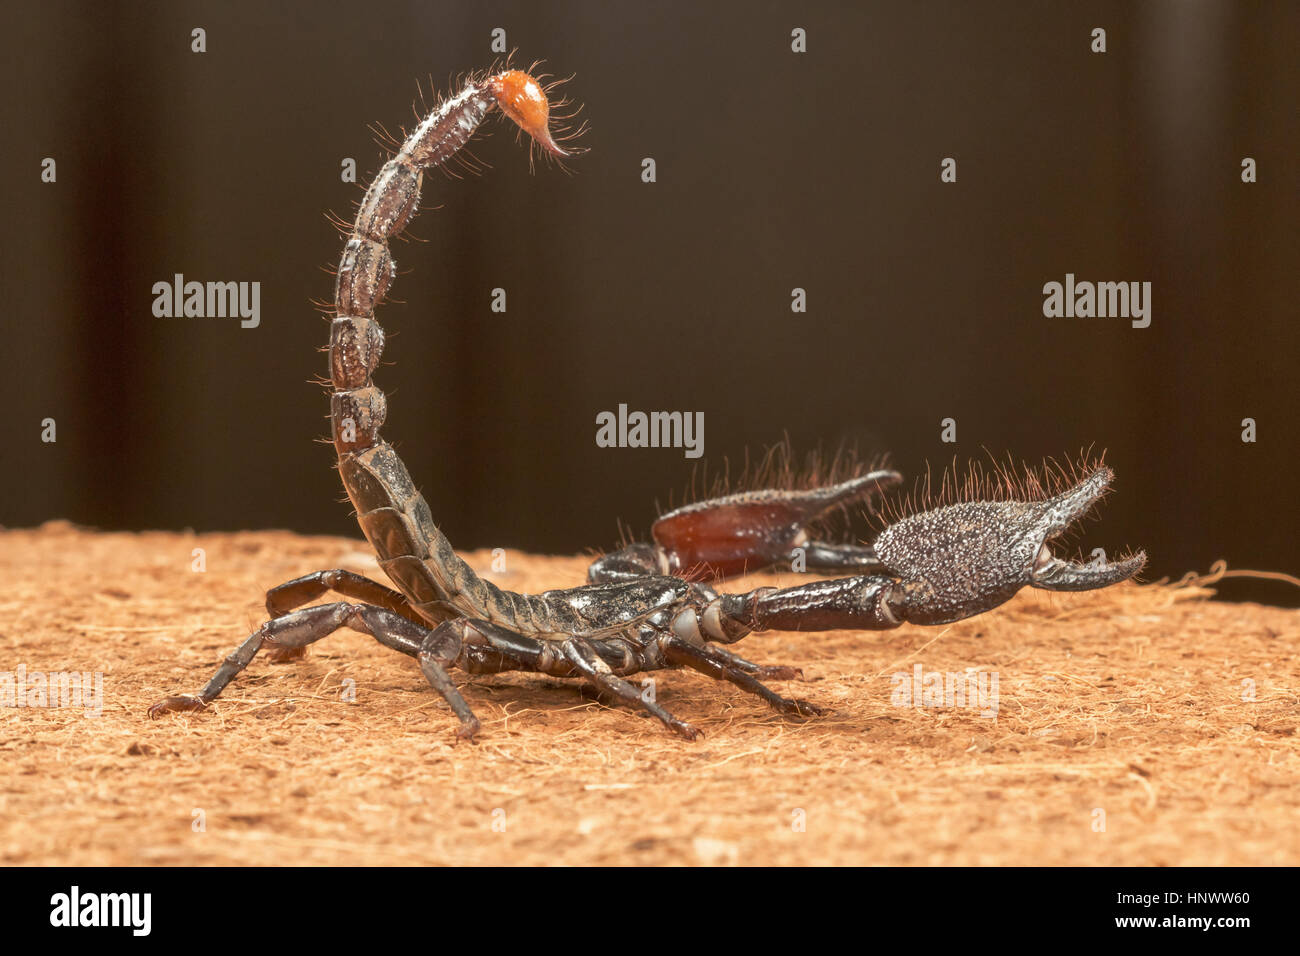 Burrowing scorpion, Heterometrus sp., Udanti Tiger Reserve, Chhattisgarh. Large scorpion with massive pincers. Stock Photo